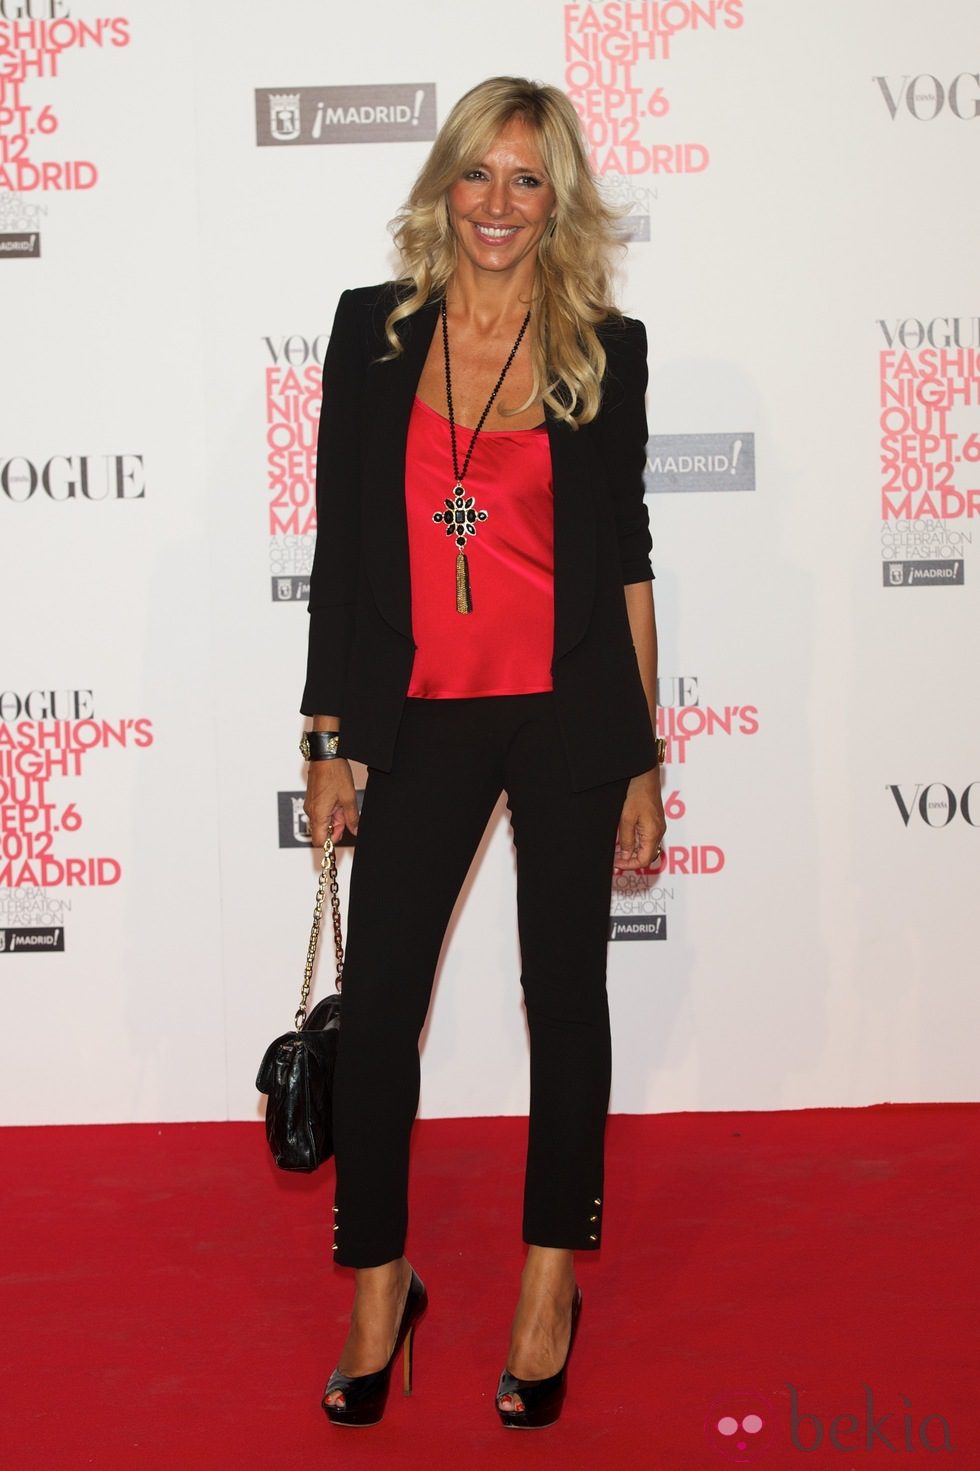 Marta Robles en la Vogue Fashion's Night Out 2012 en Madrid